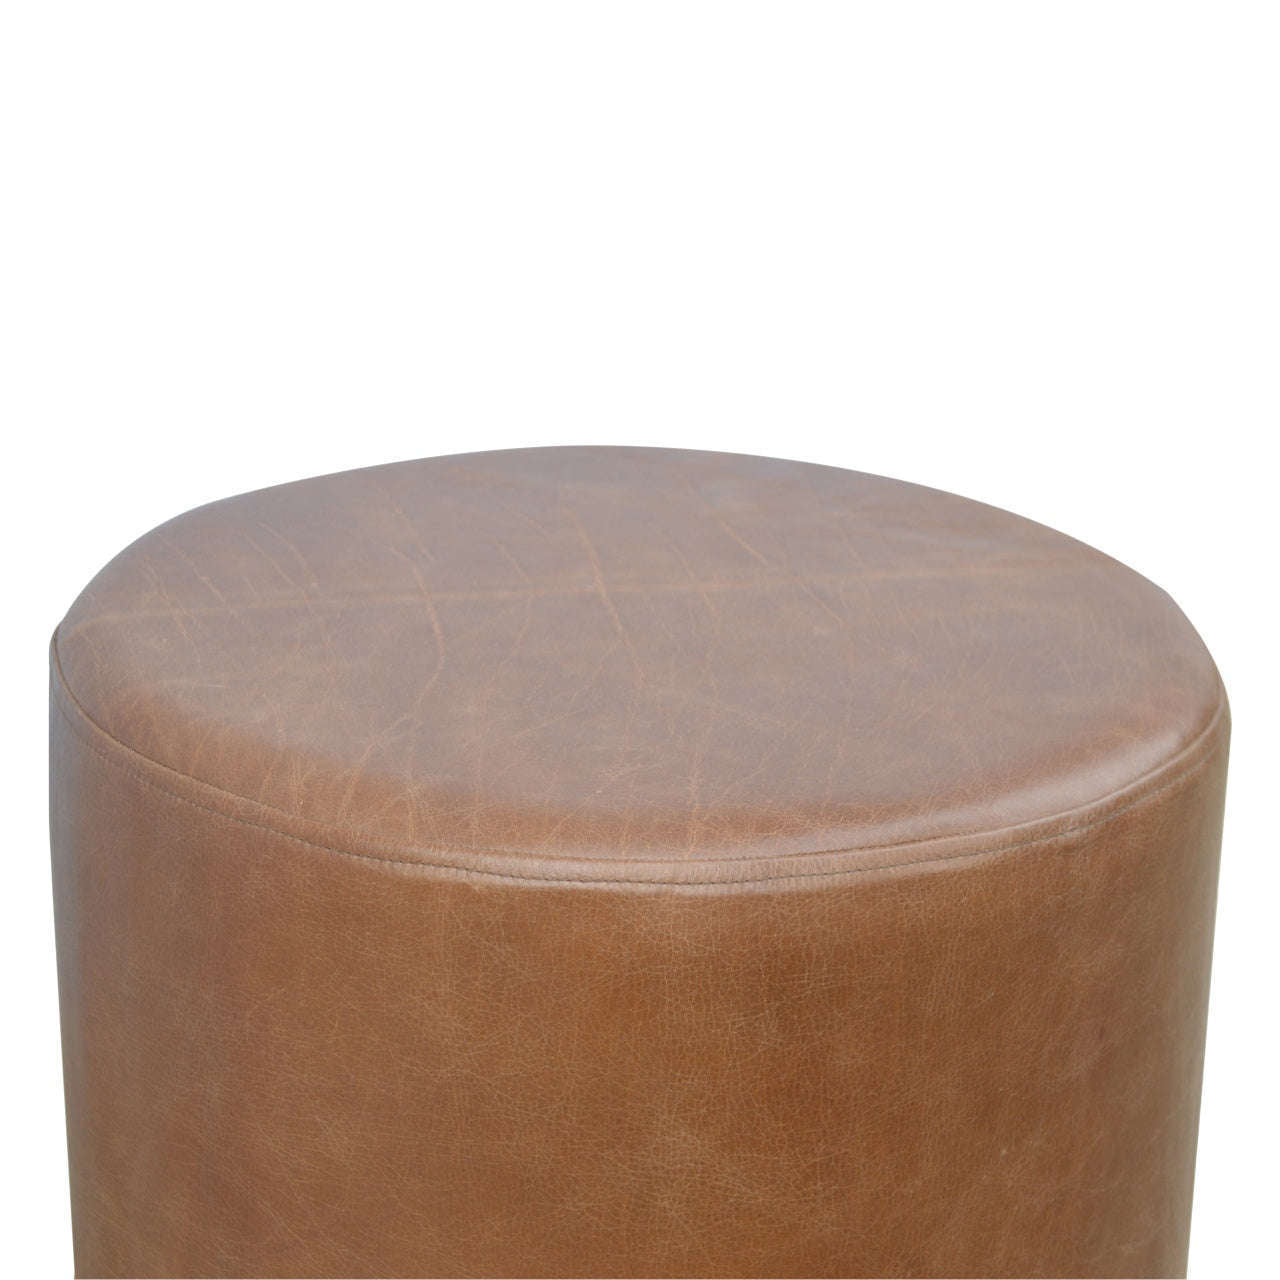 Ashpinoke:Brown Buffalo Leather Footstool with Gold Base-Footstools-Artisan